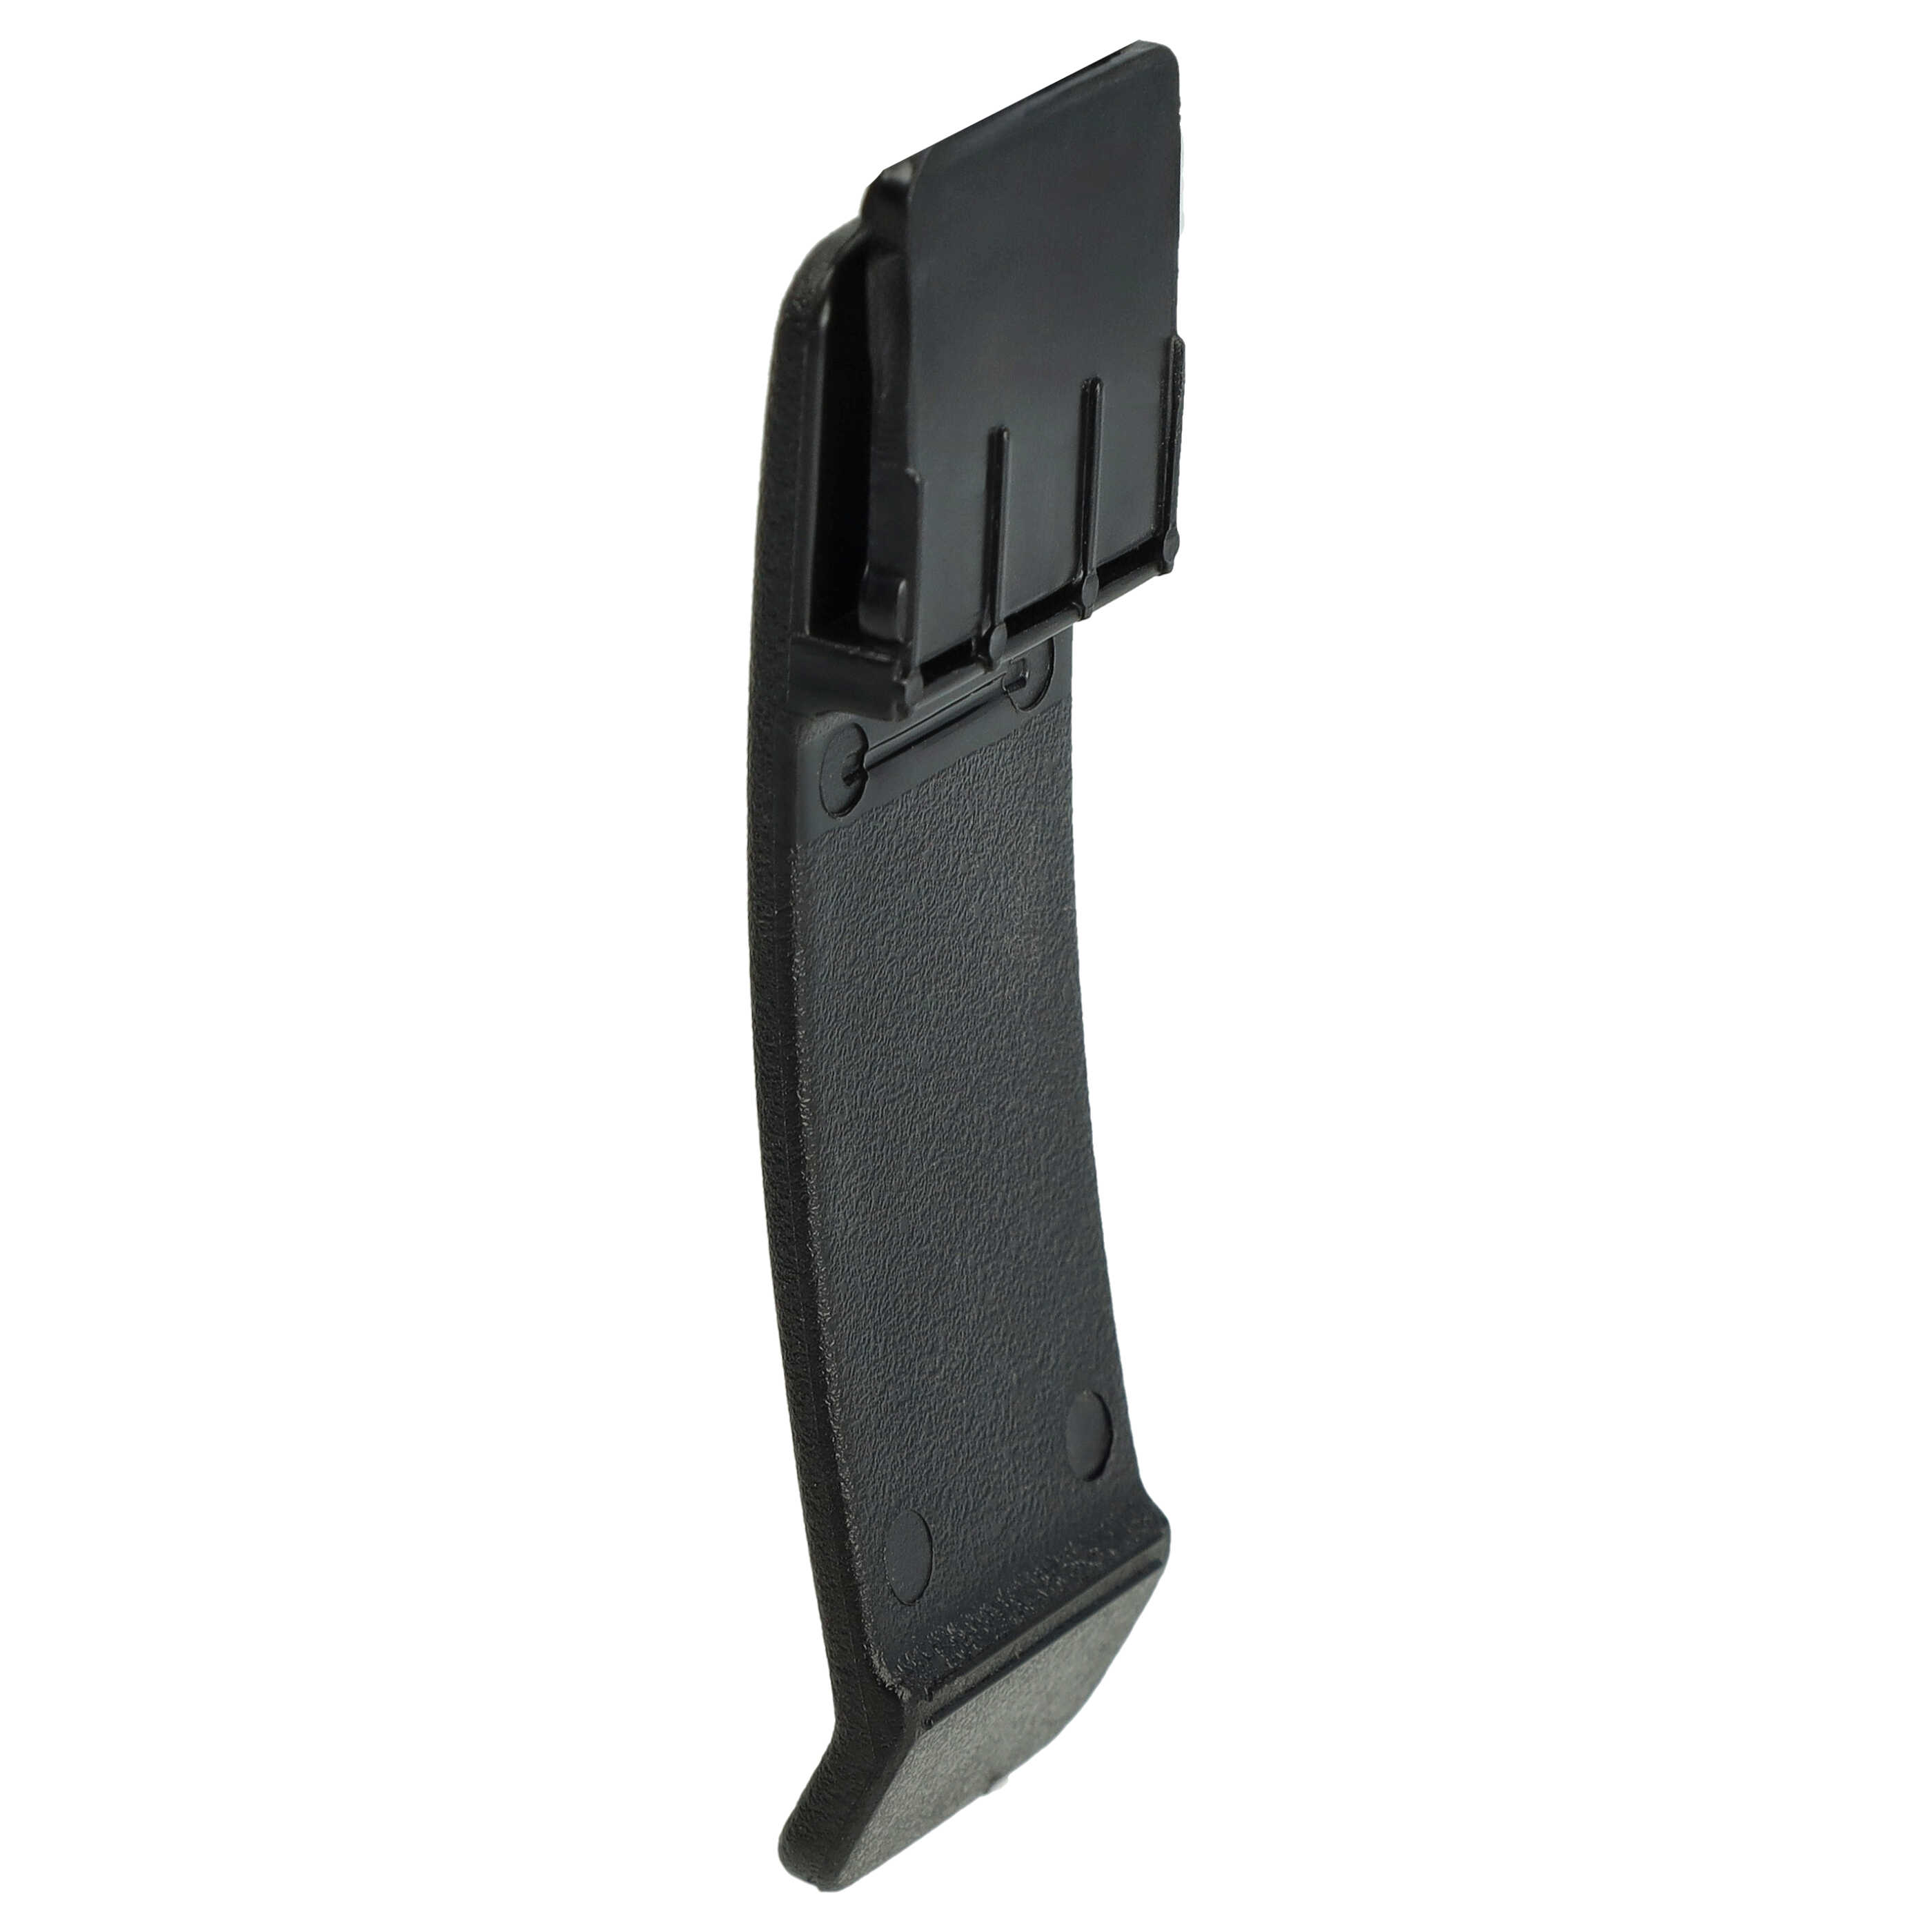 Belt Clip for IC-F11 Icom Radio - Plastic, Black